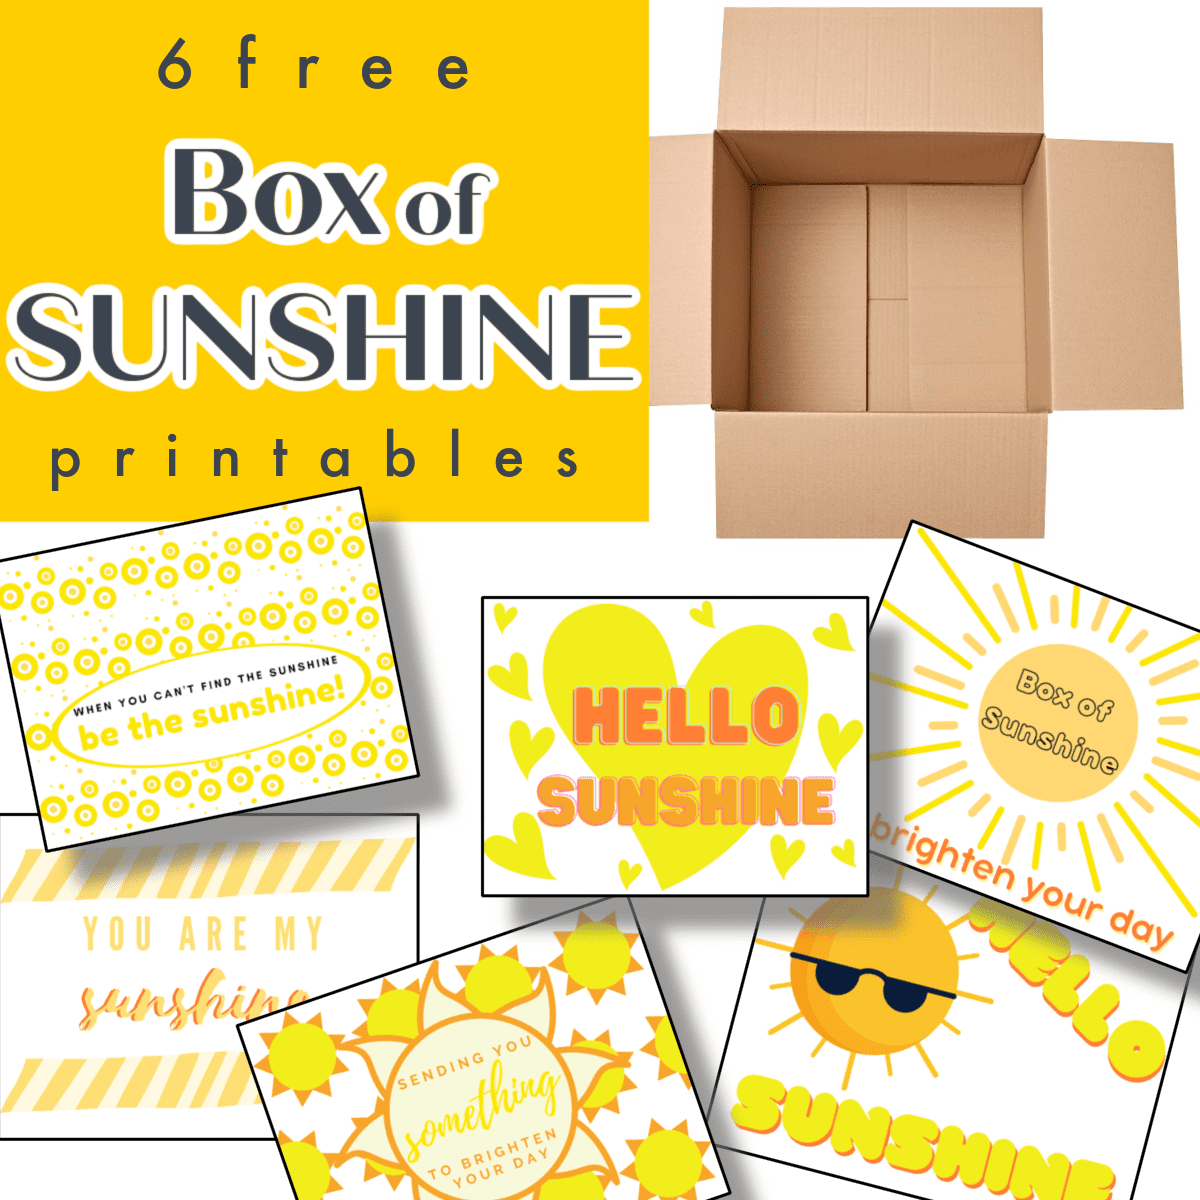 Free Box Of Sunshine Printable Organized 31 - Box of Sunshine Free Printable